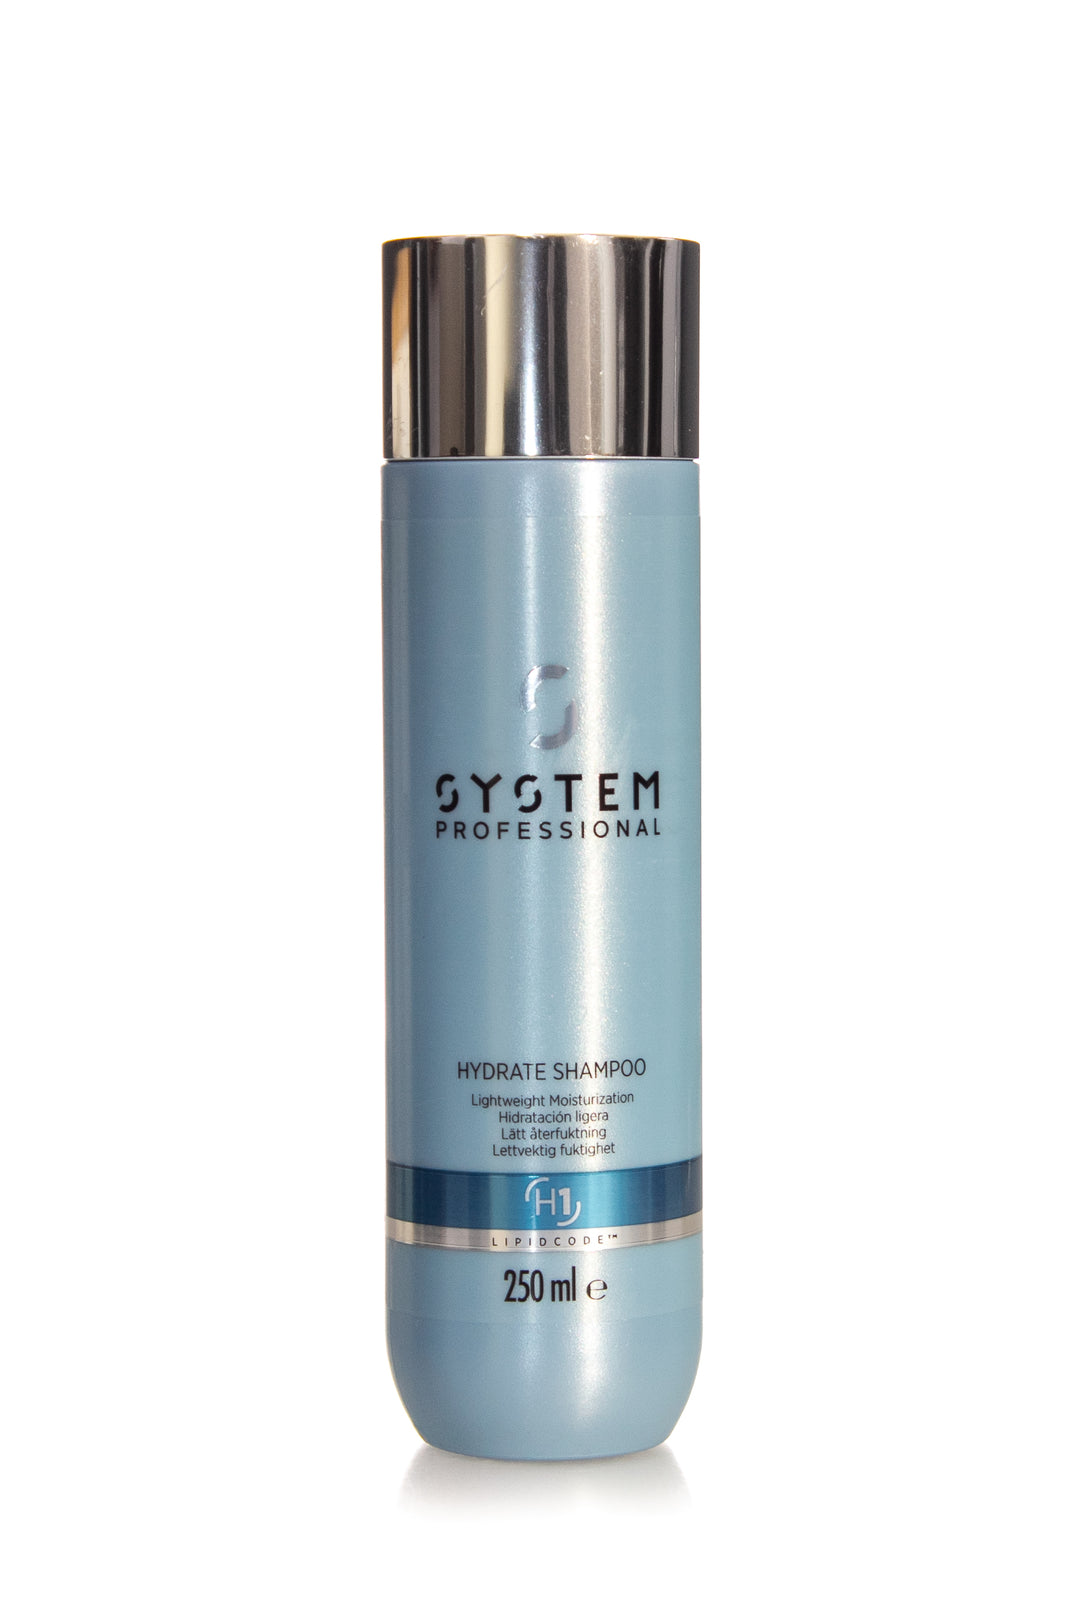 SYSTEM PROFESSIONAL Hydrate Shampoo  | 250ml